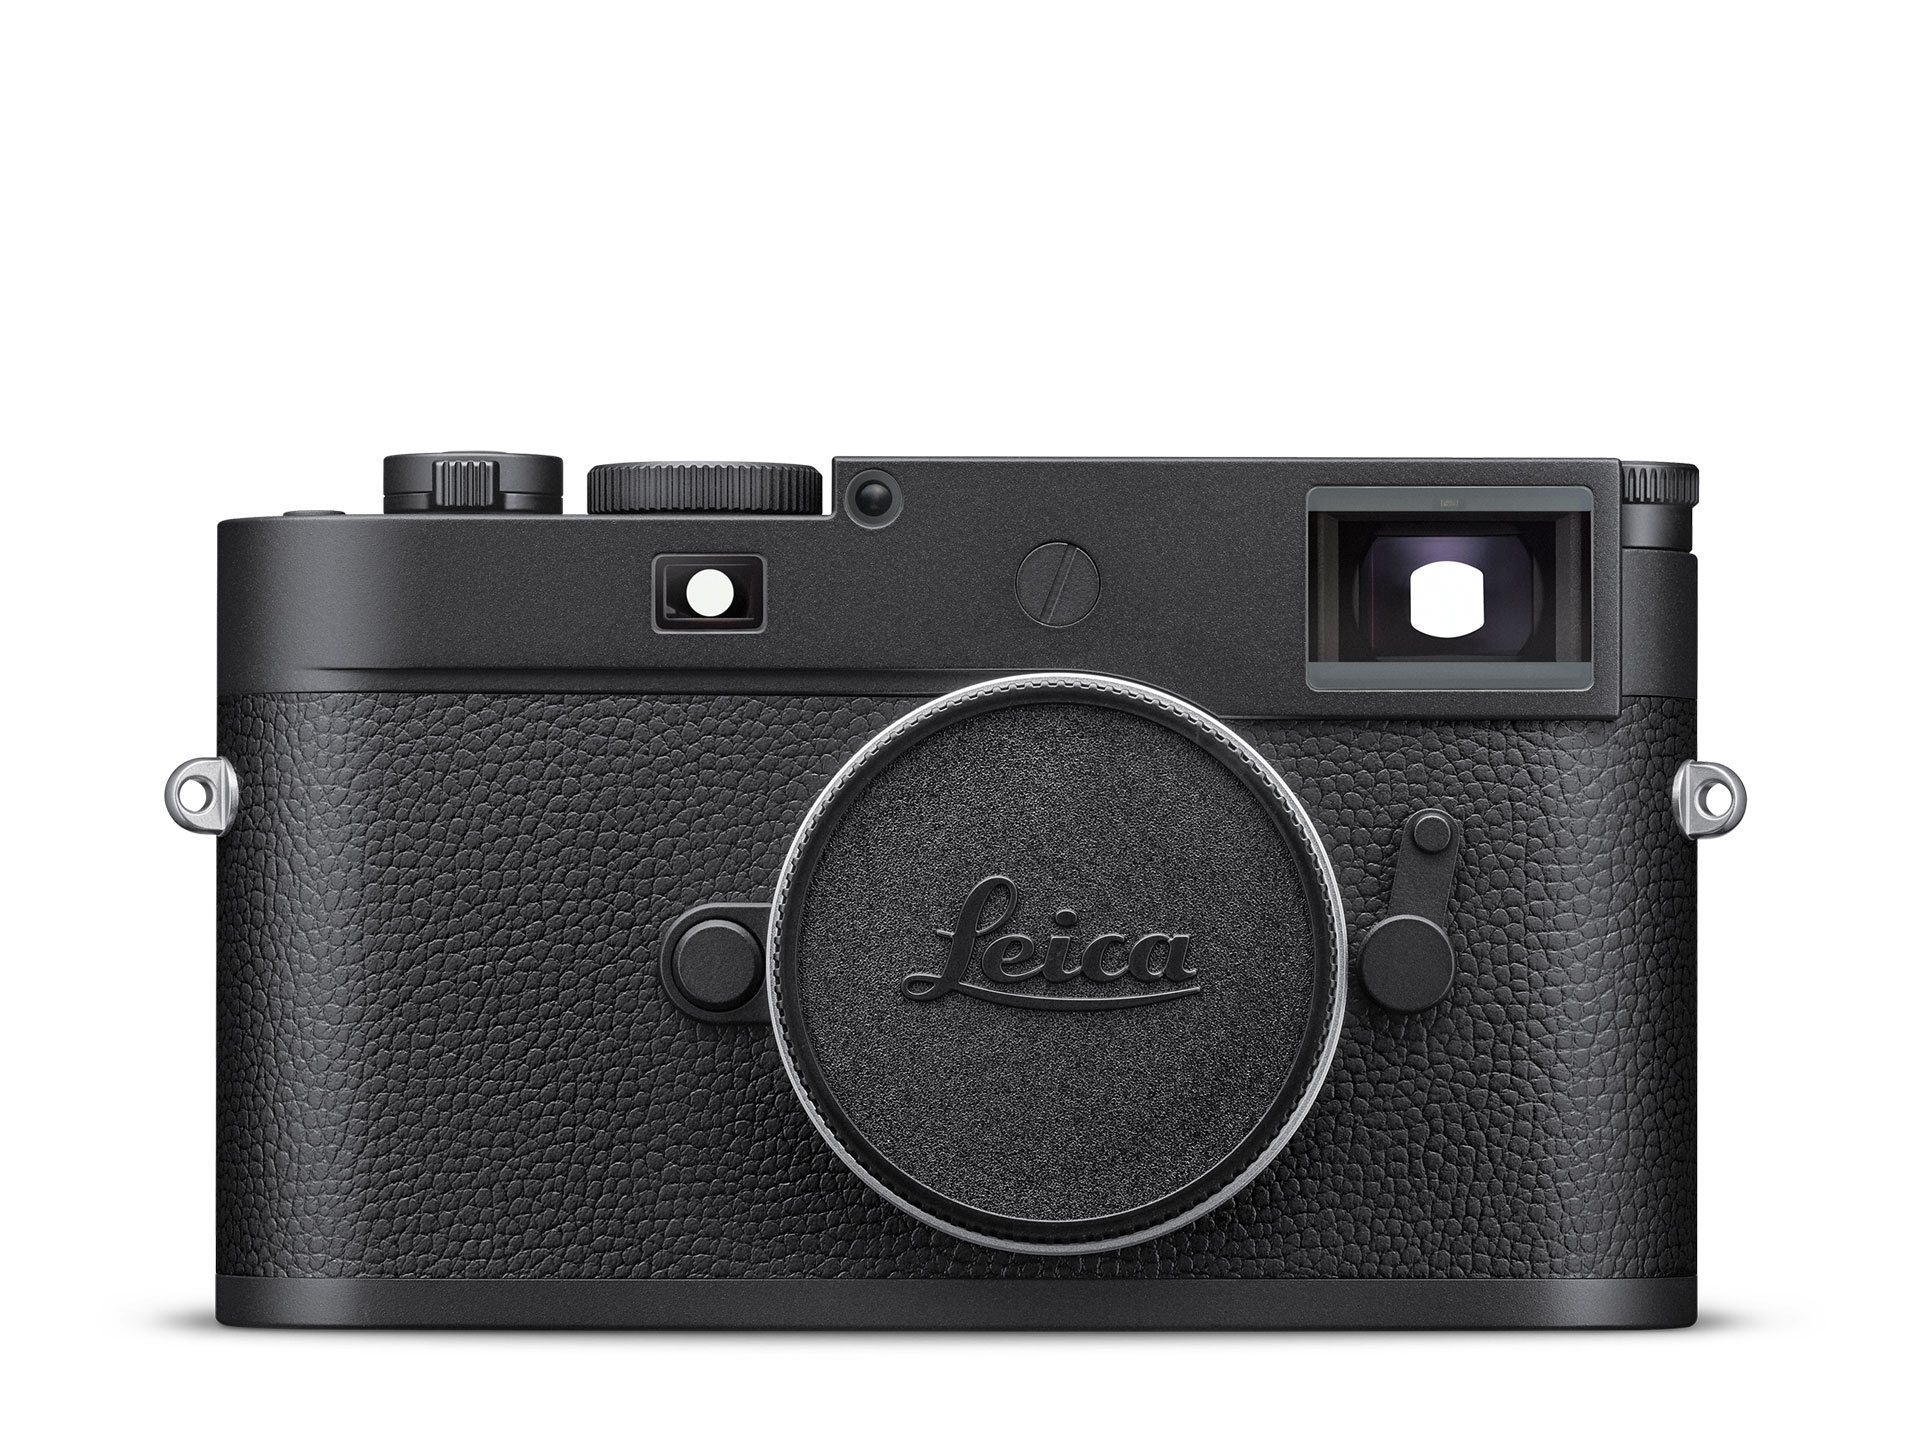 Leica M Monochrom Review